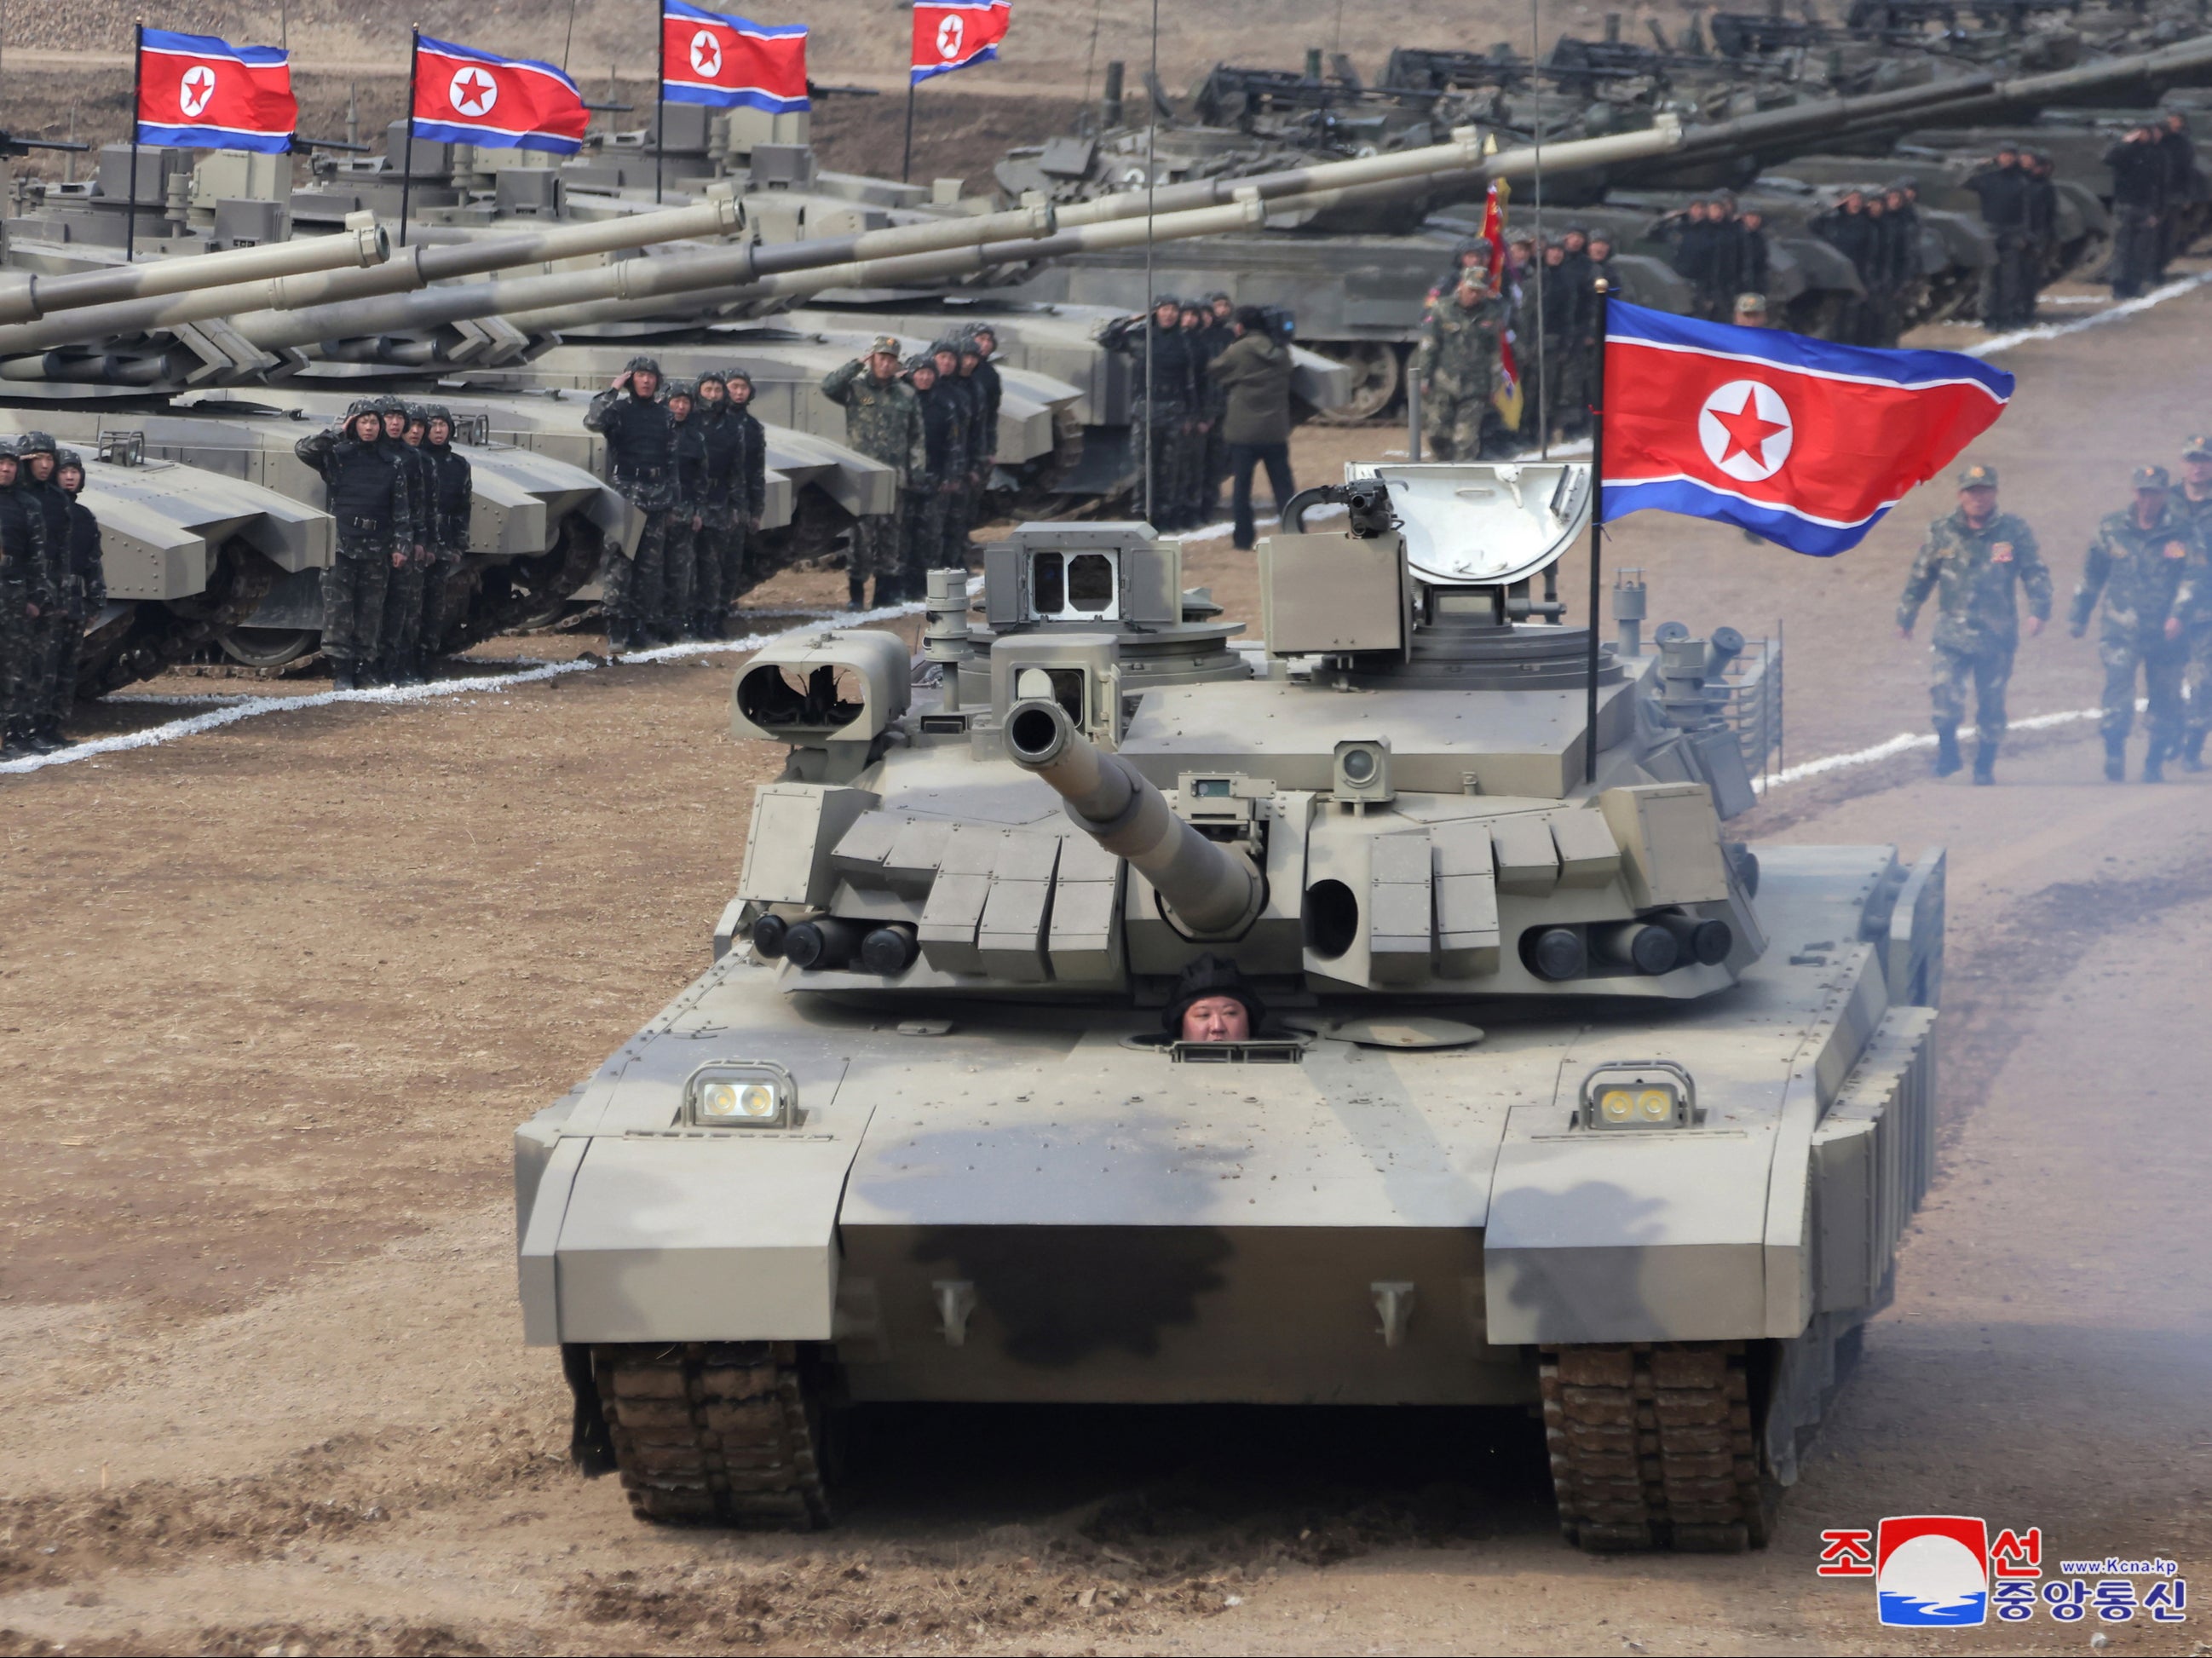 North Korean Supreme leader Kim Jong-un drives new-type tank during drills